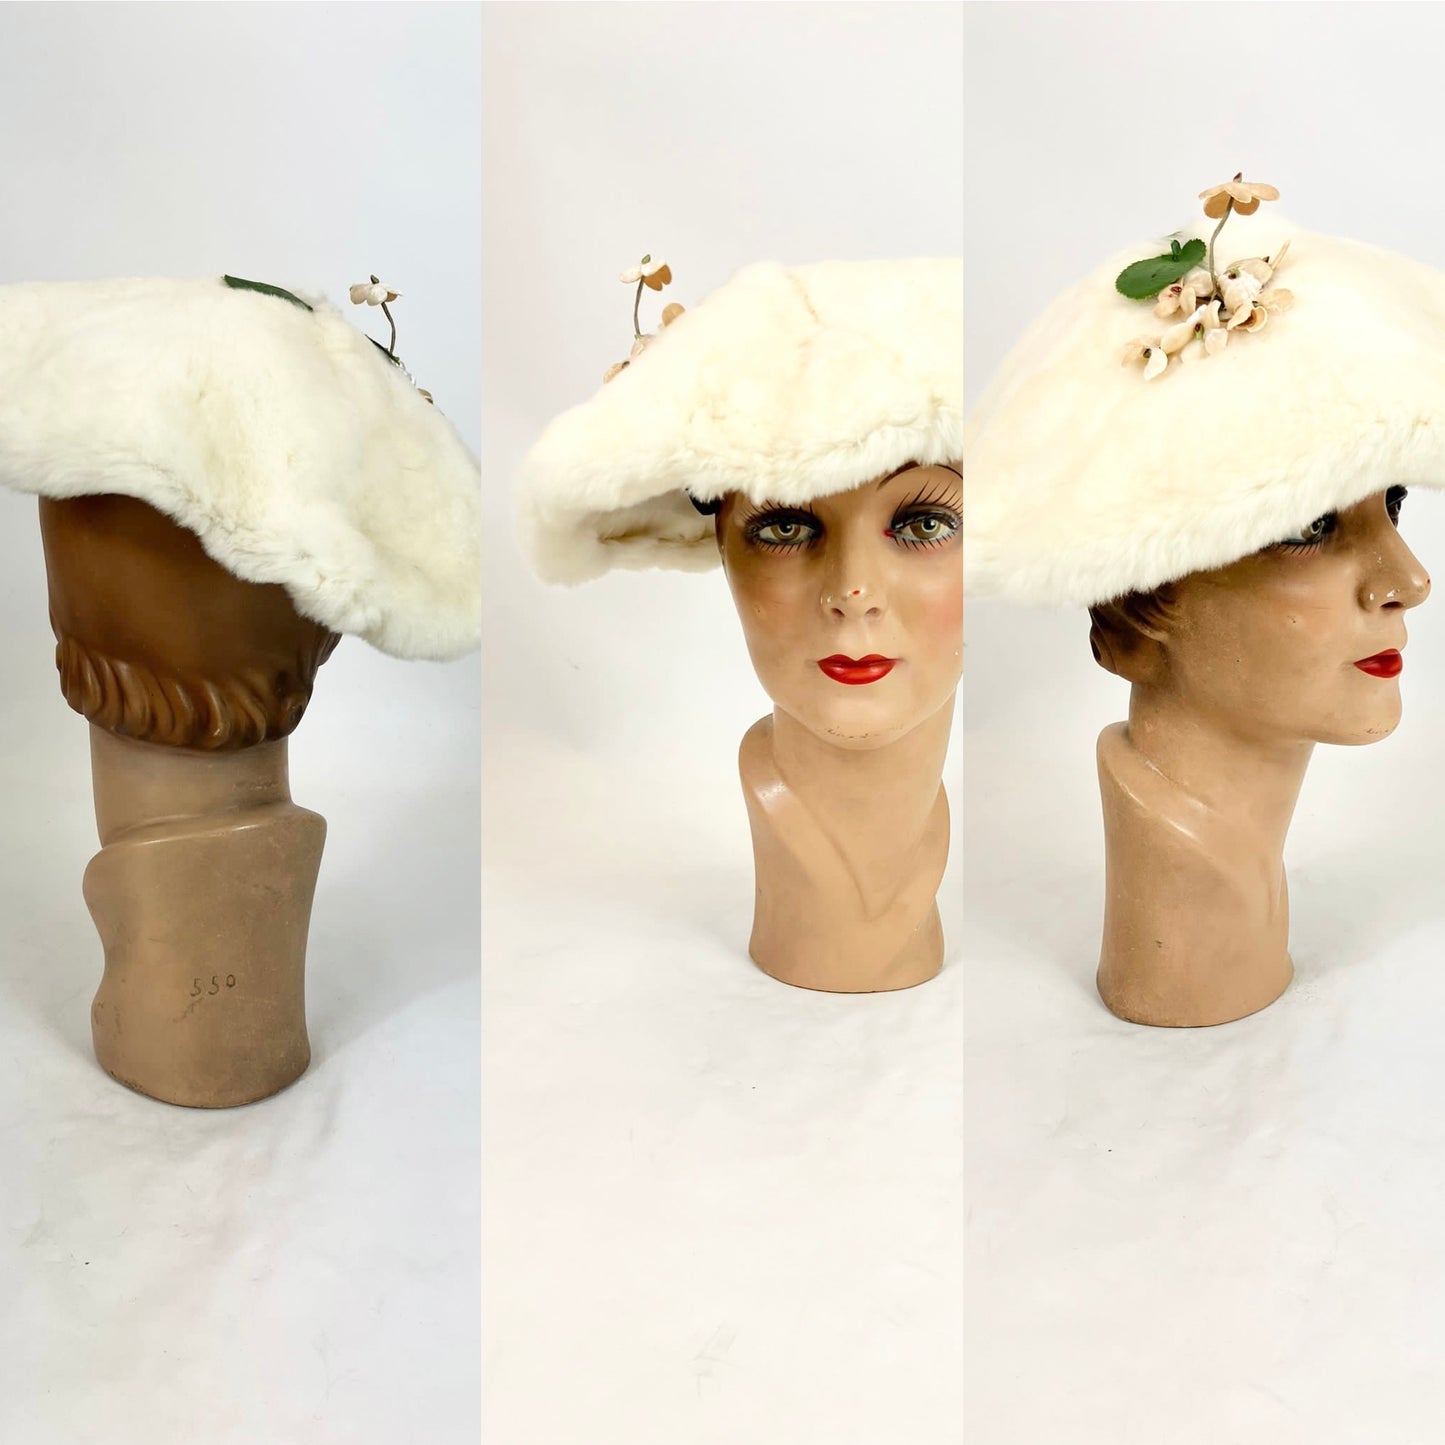 Original 1950’s Fabulous Platter/ Saucer Hat - Soft Cream Fur